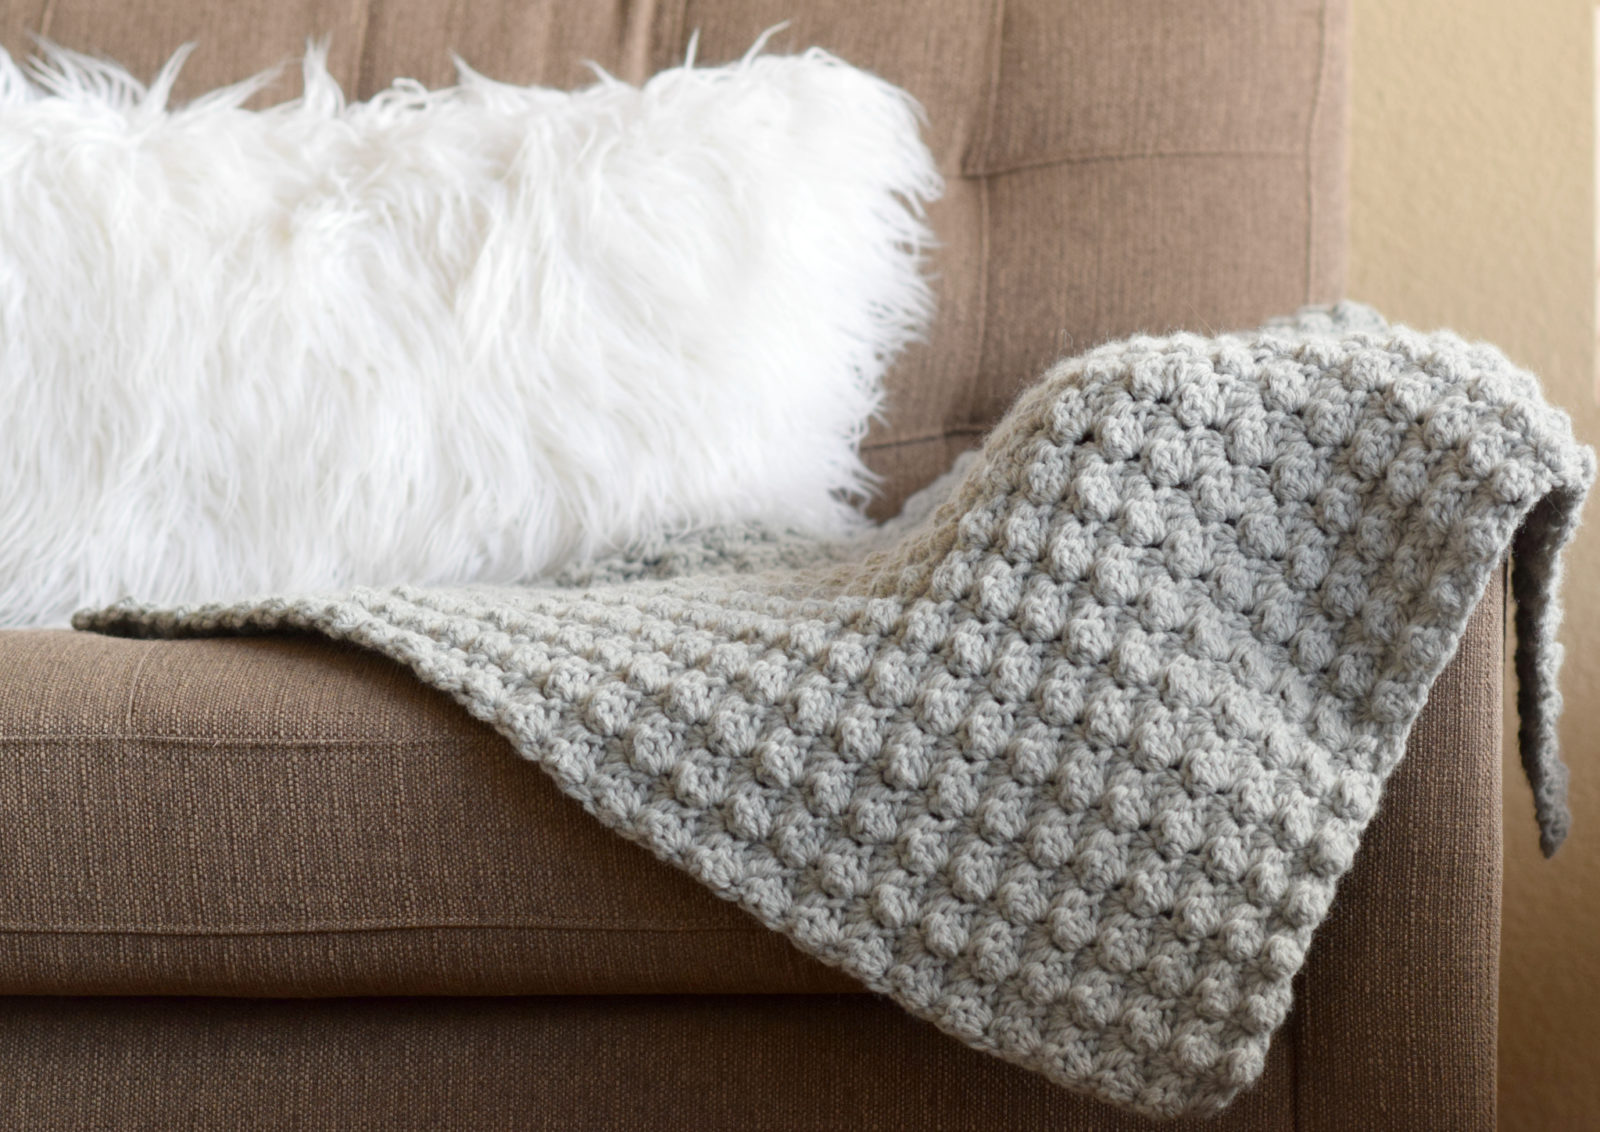 Simple Crochet Blanket